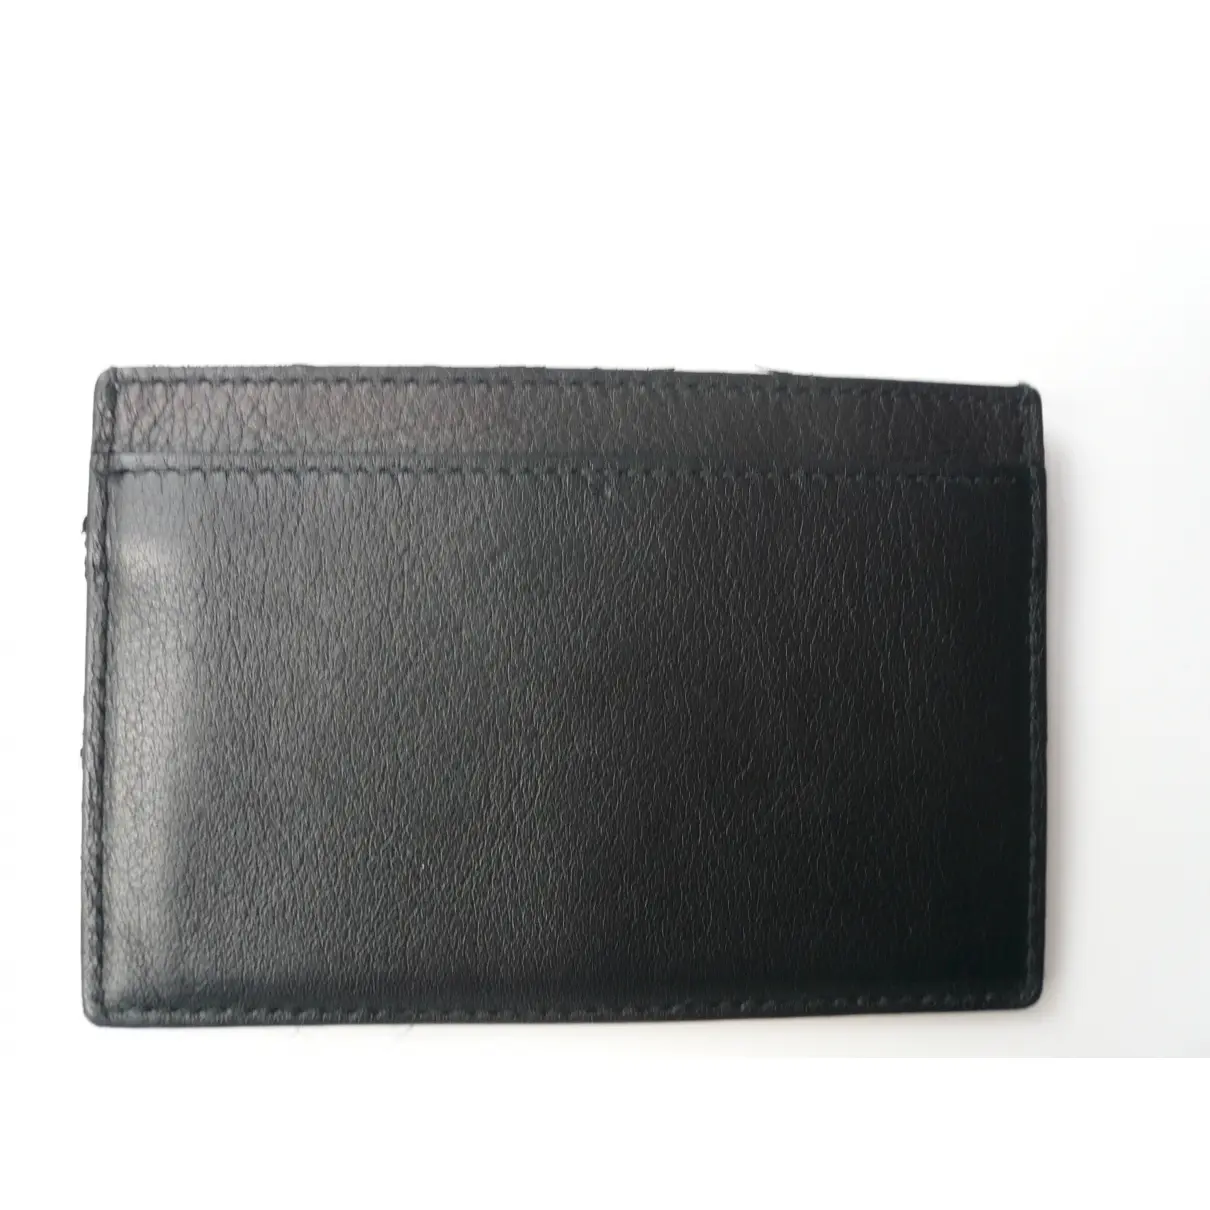 Buy Saint Laurent Chyc leather card wallet online